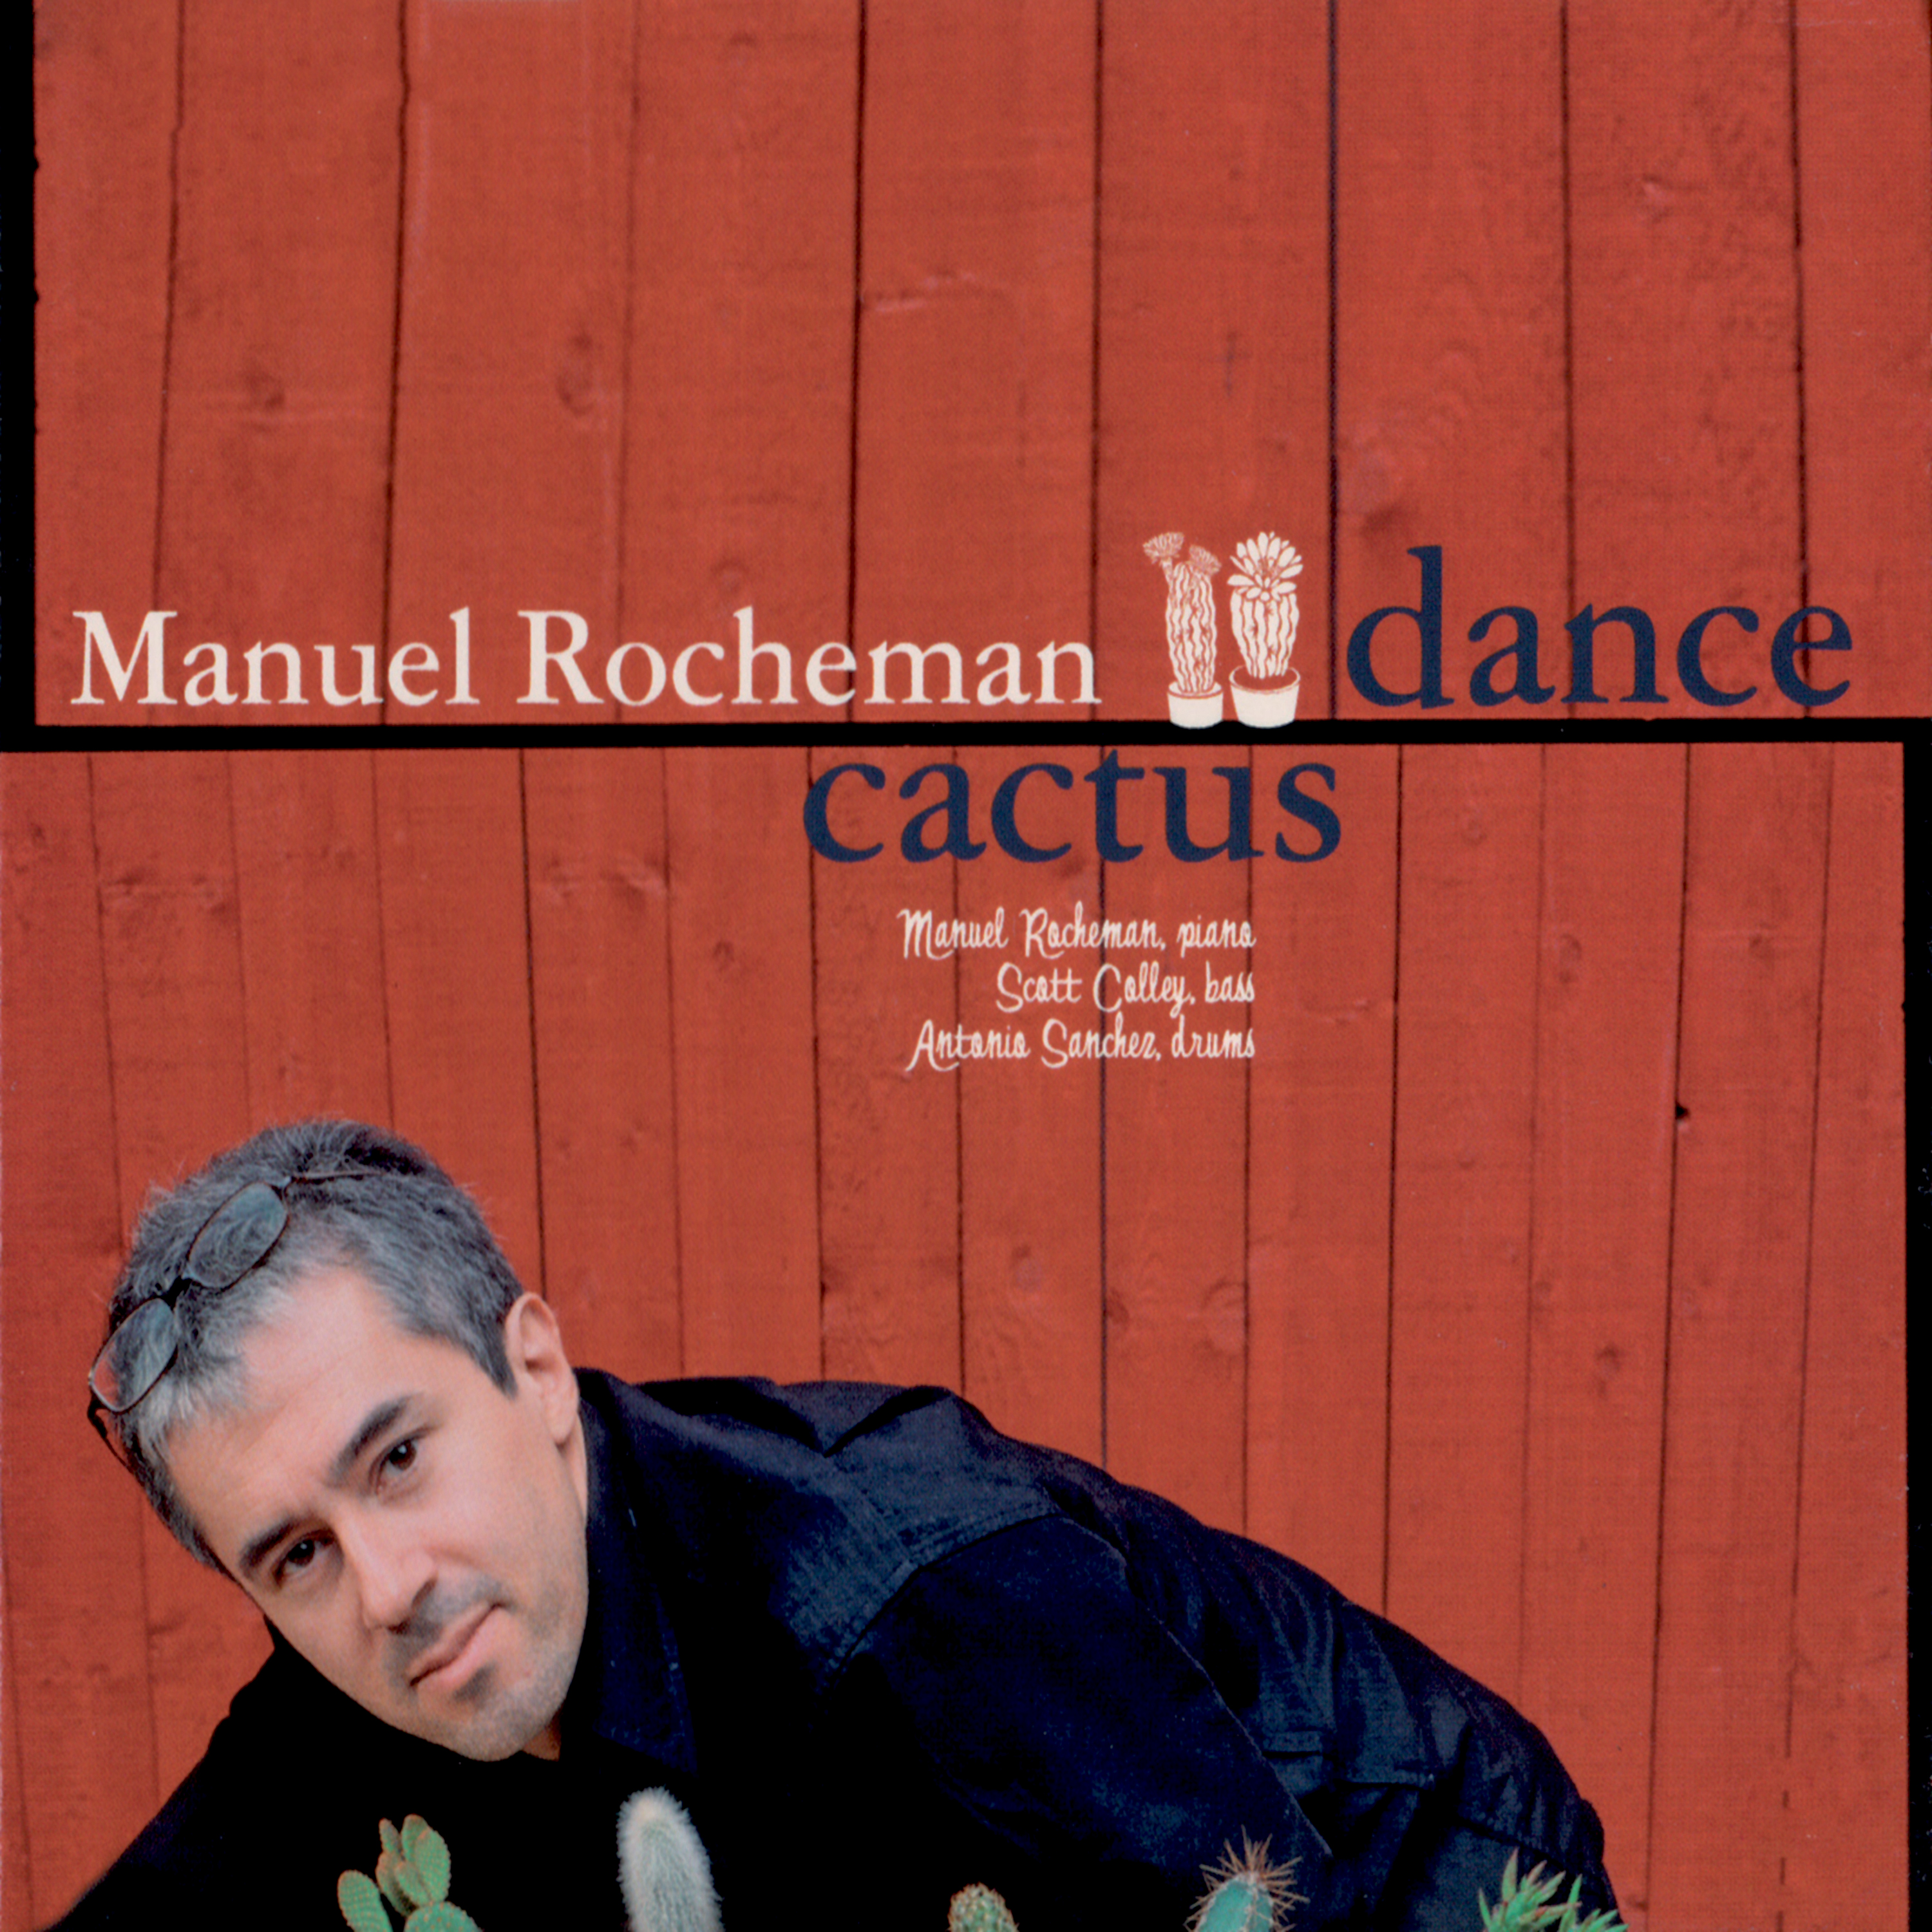 MANUEL ROCHEMAN - Cactus Dance cover 